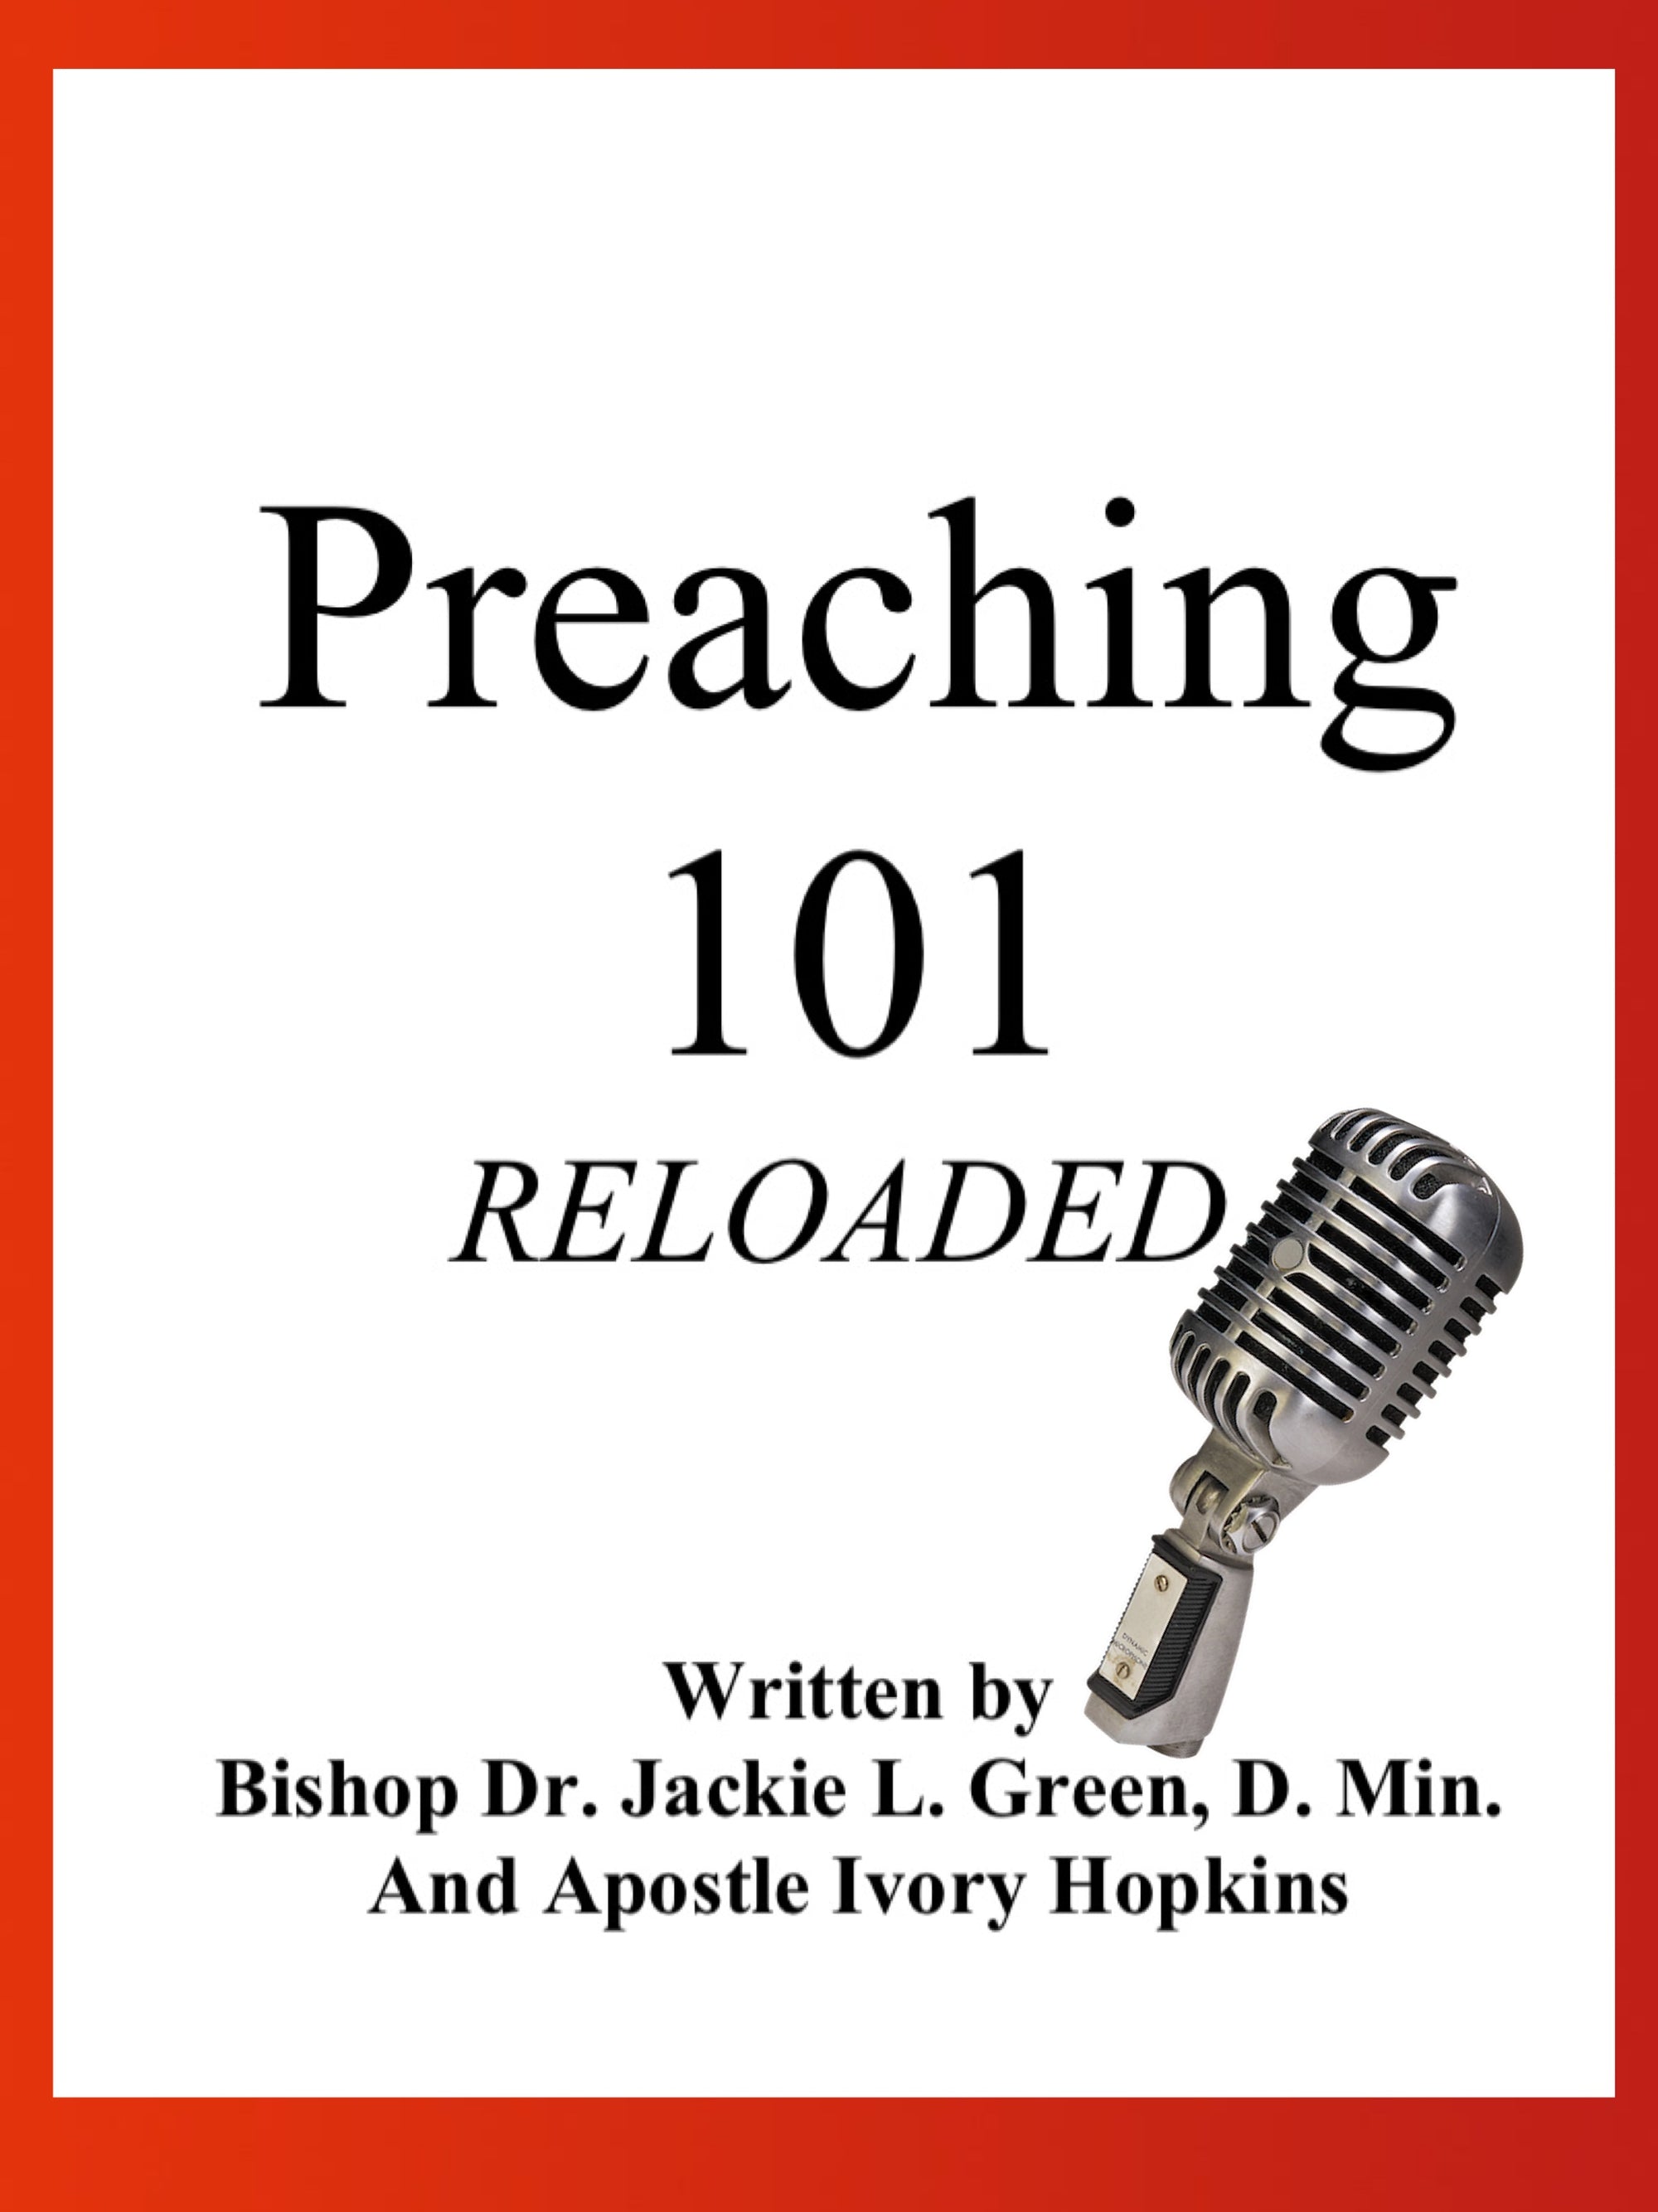 PREACHING 101